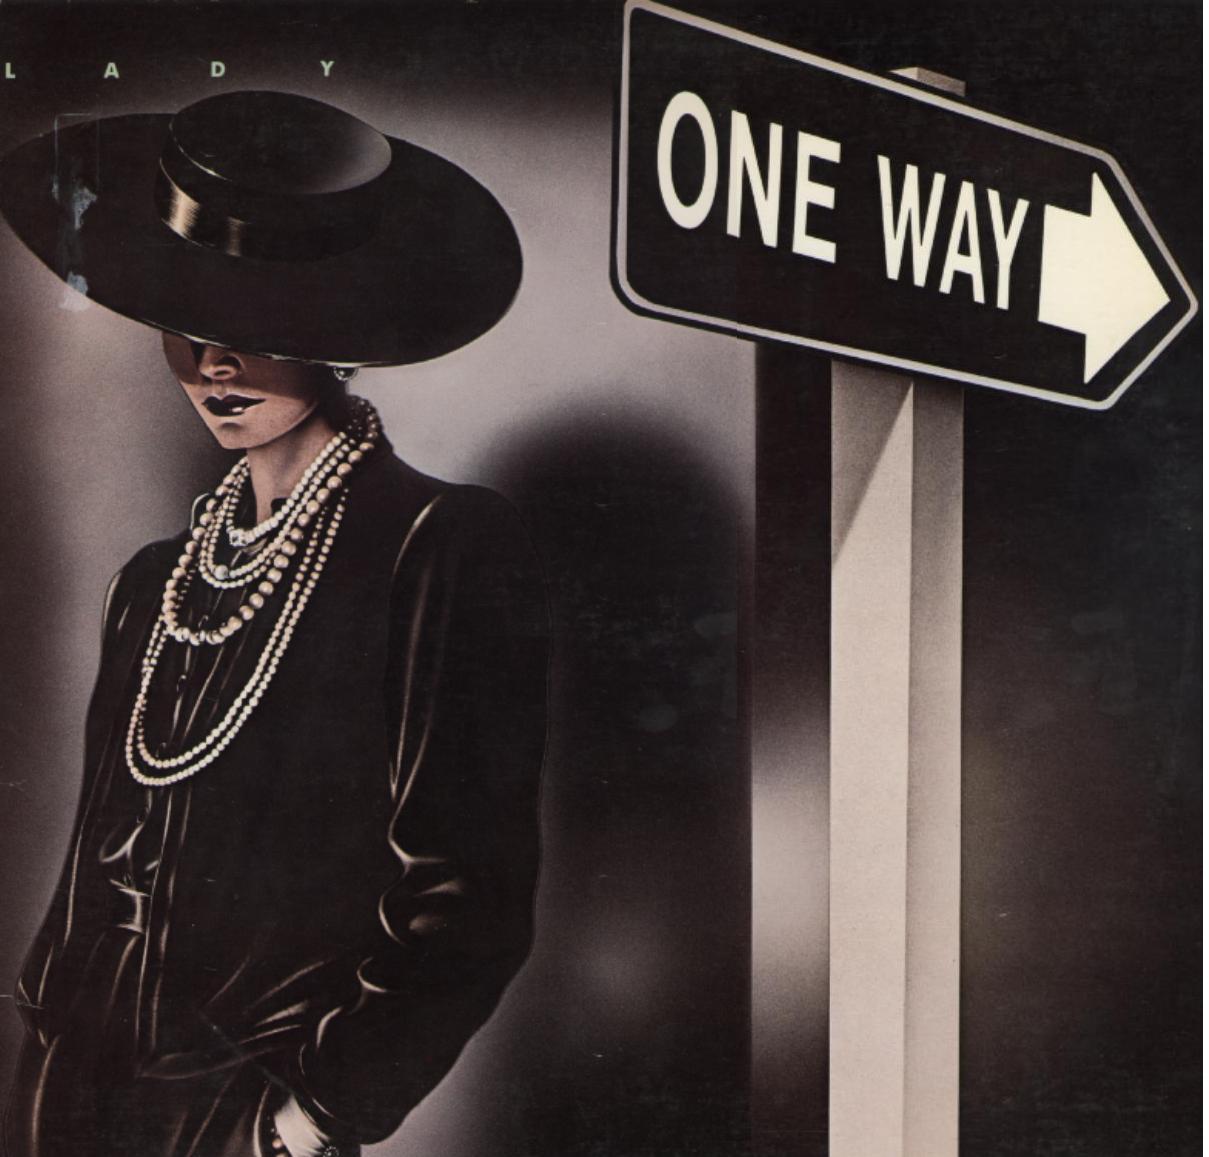 Dont way. One way Lady. Винил my way 1972г Франция. One way – who's Foolin' who. Ты моя леди фото.